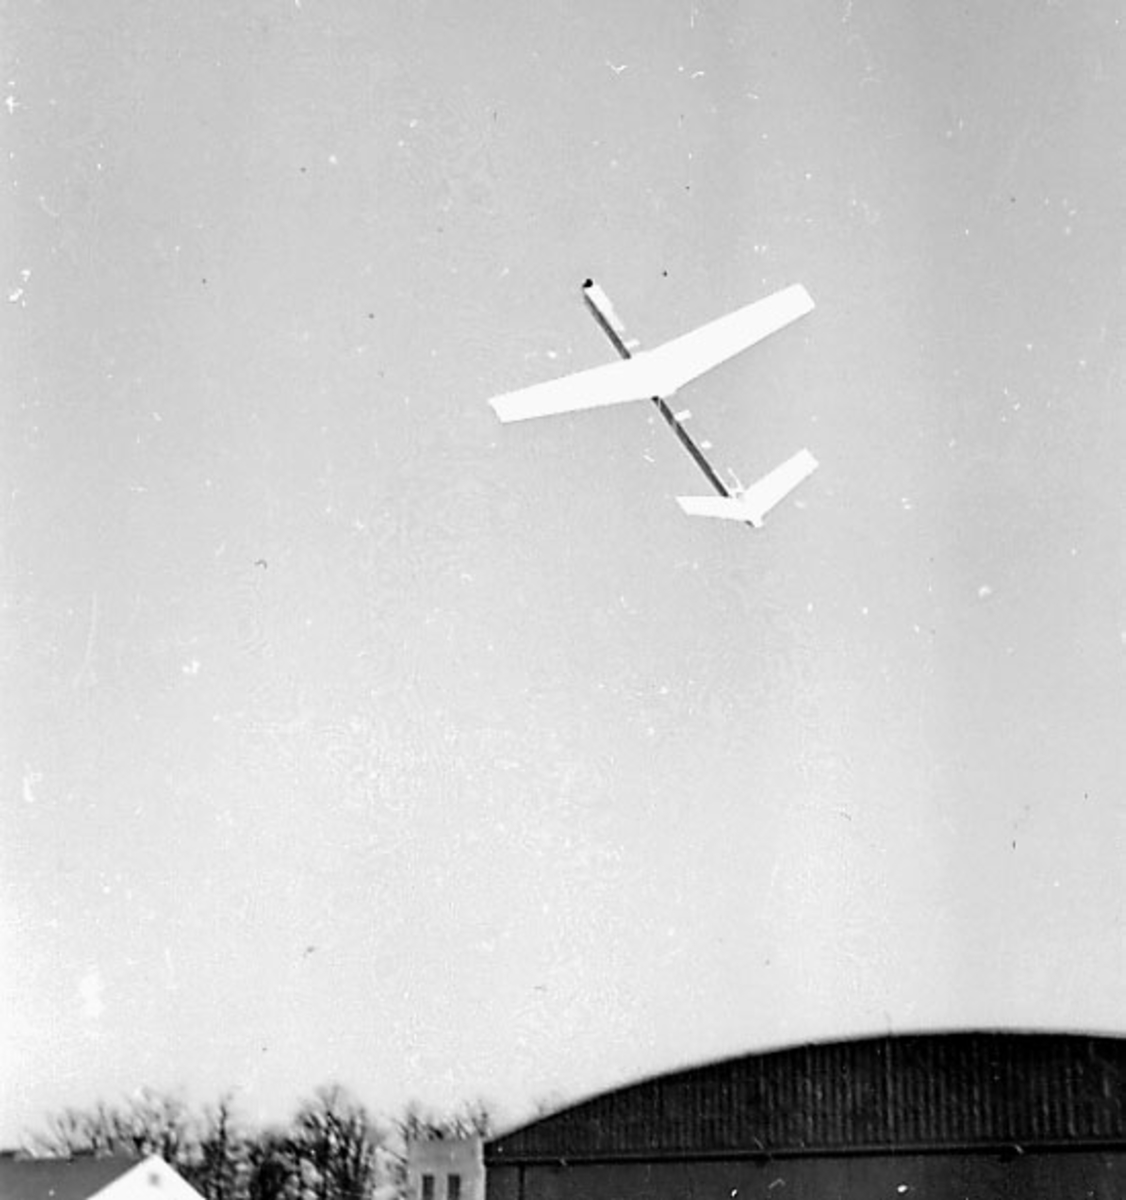 Luftfoto av modellfly.